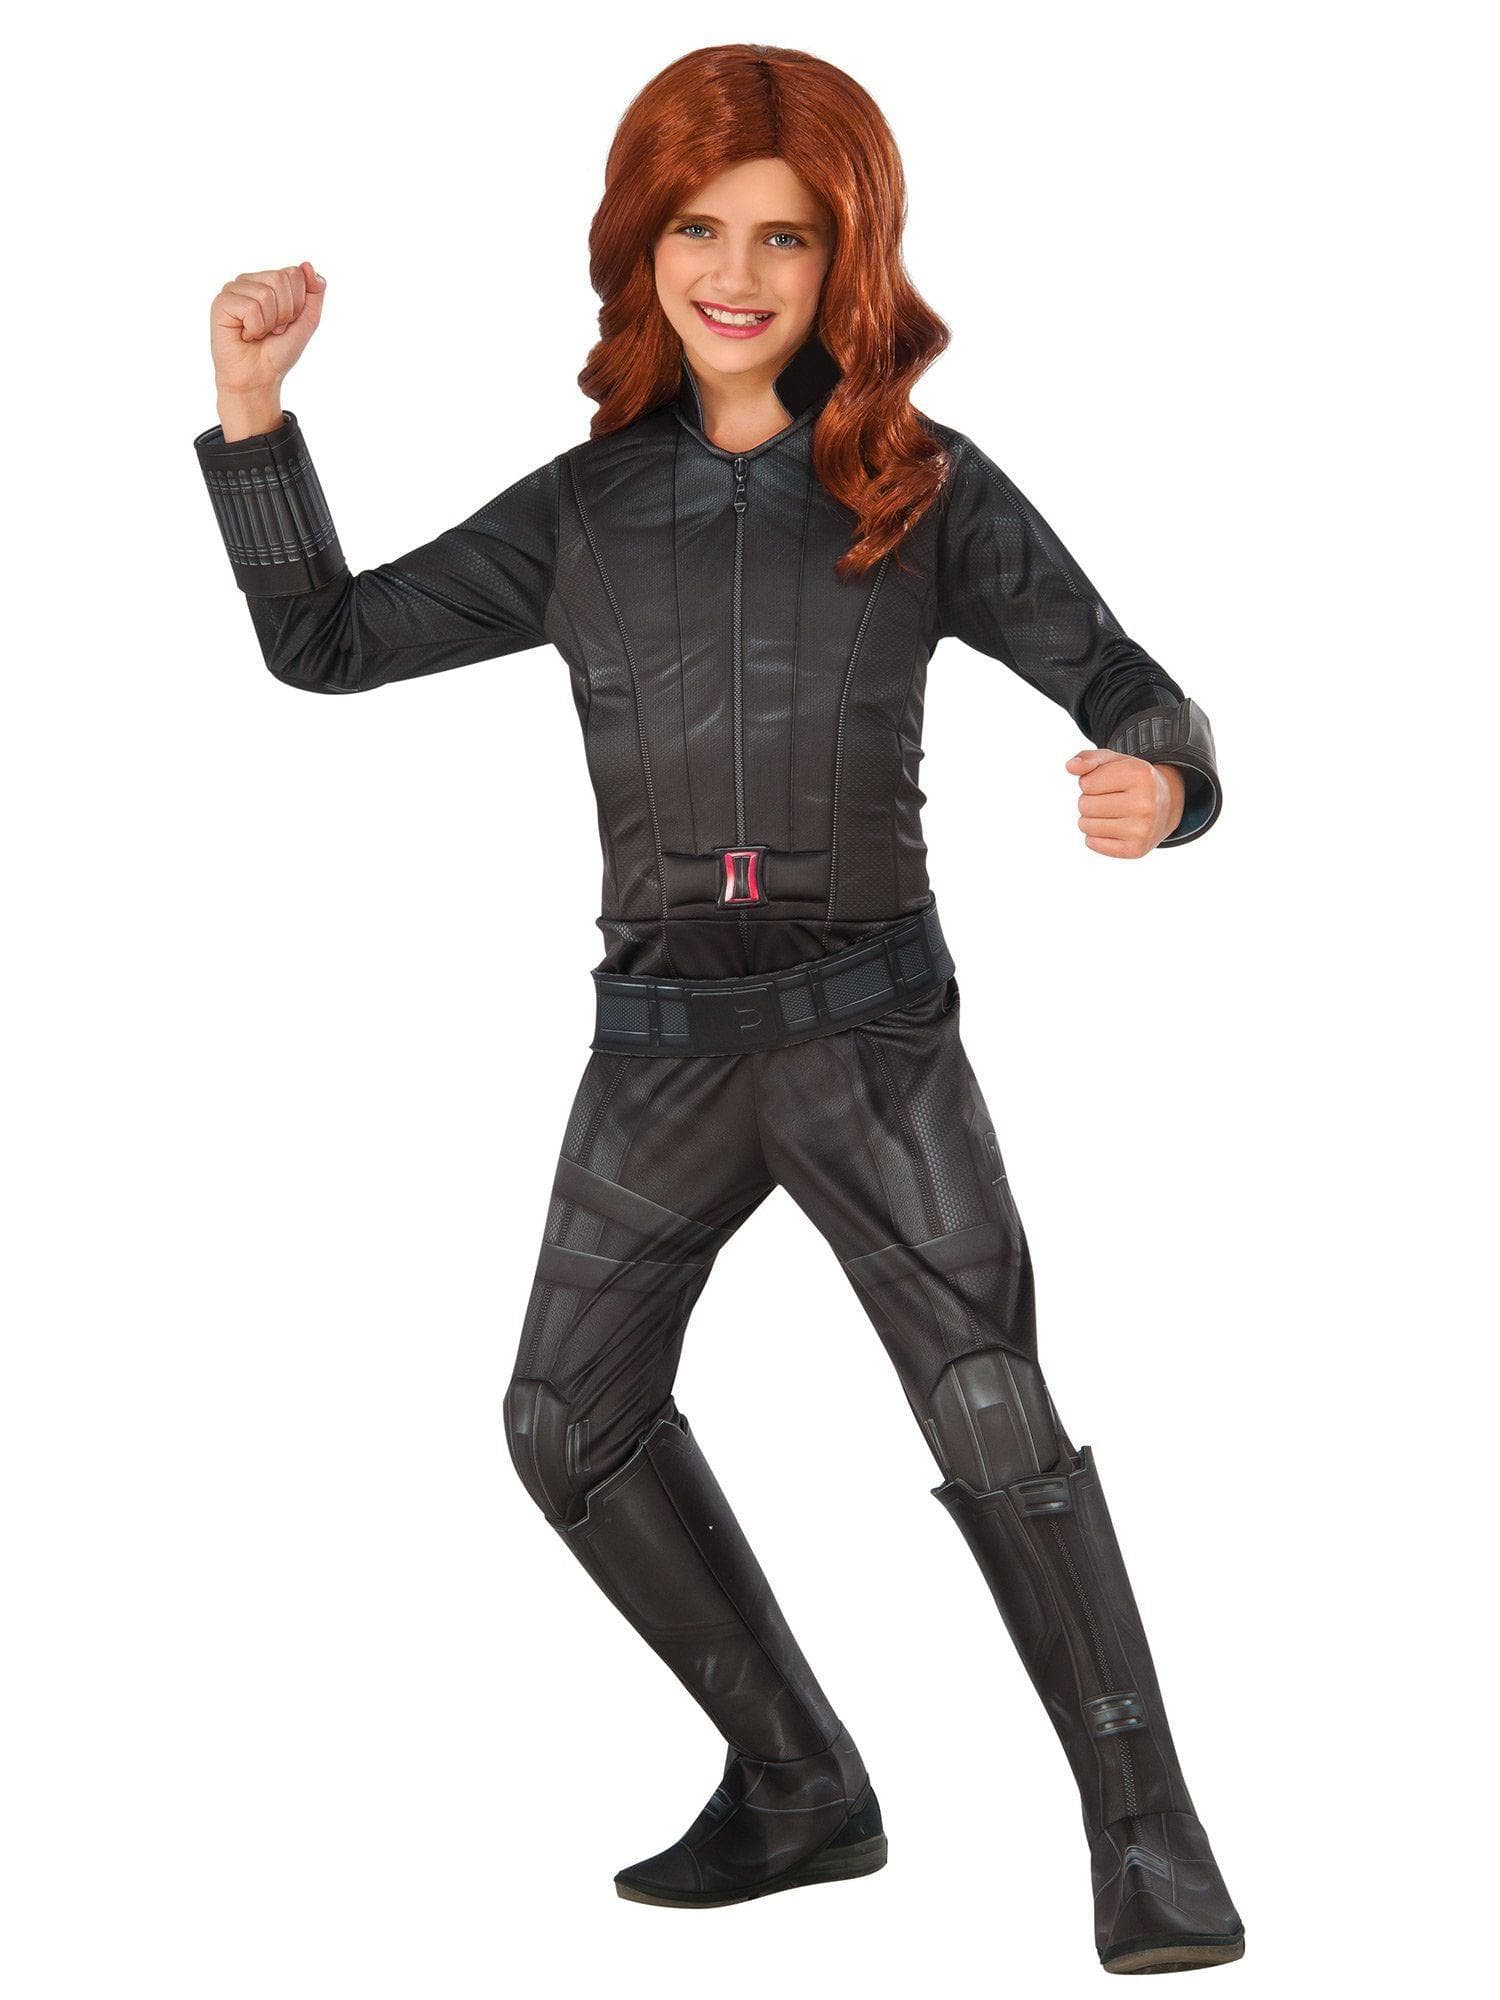 Kids Avengers Black Widow Costume - costumes.com